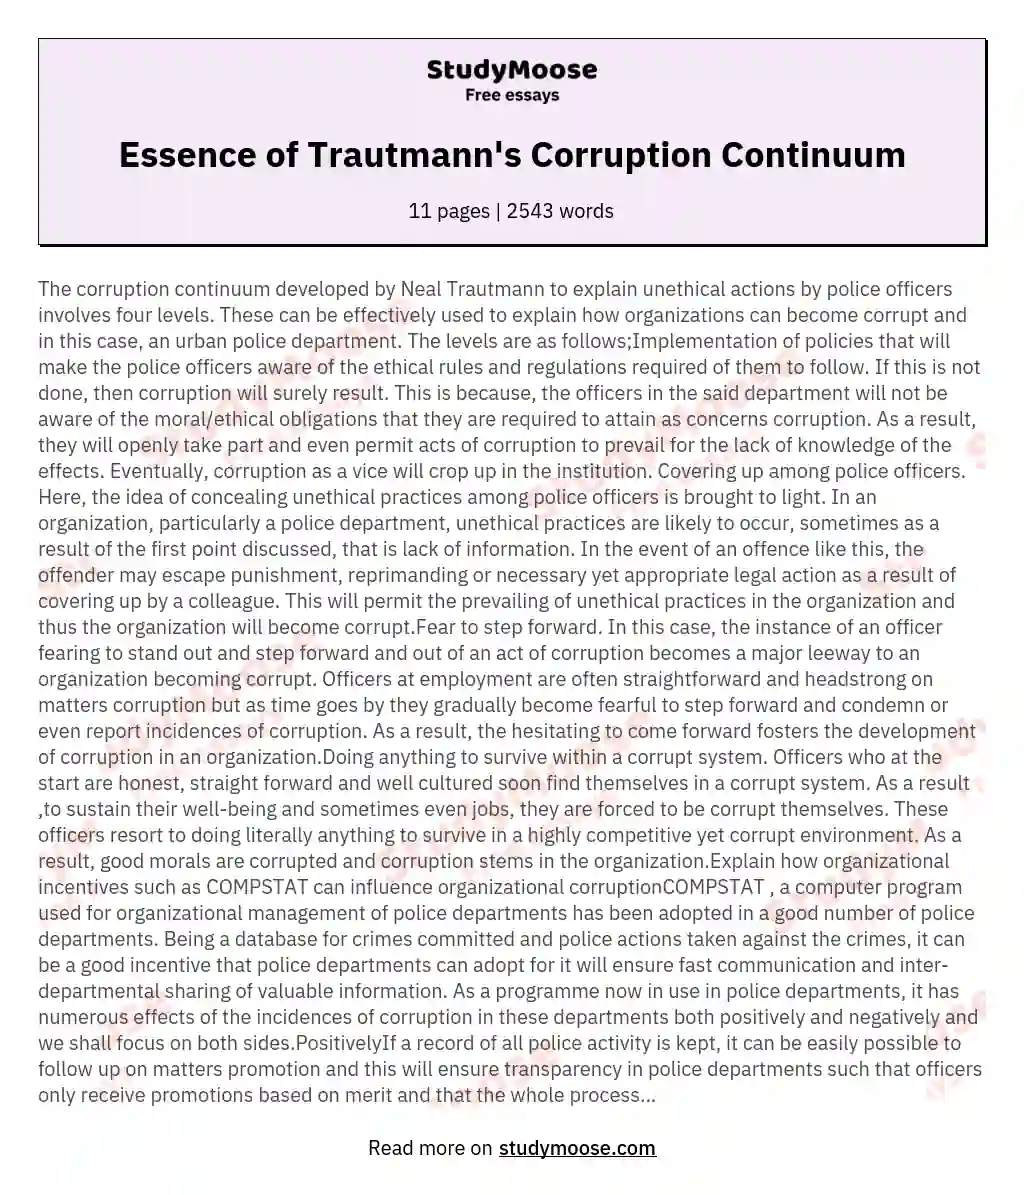 Essence of Trautmann's Corruption Continuum